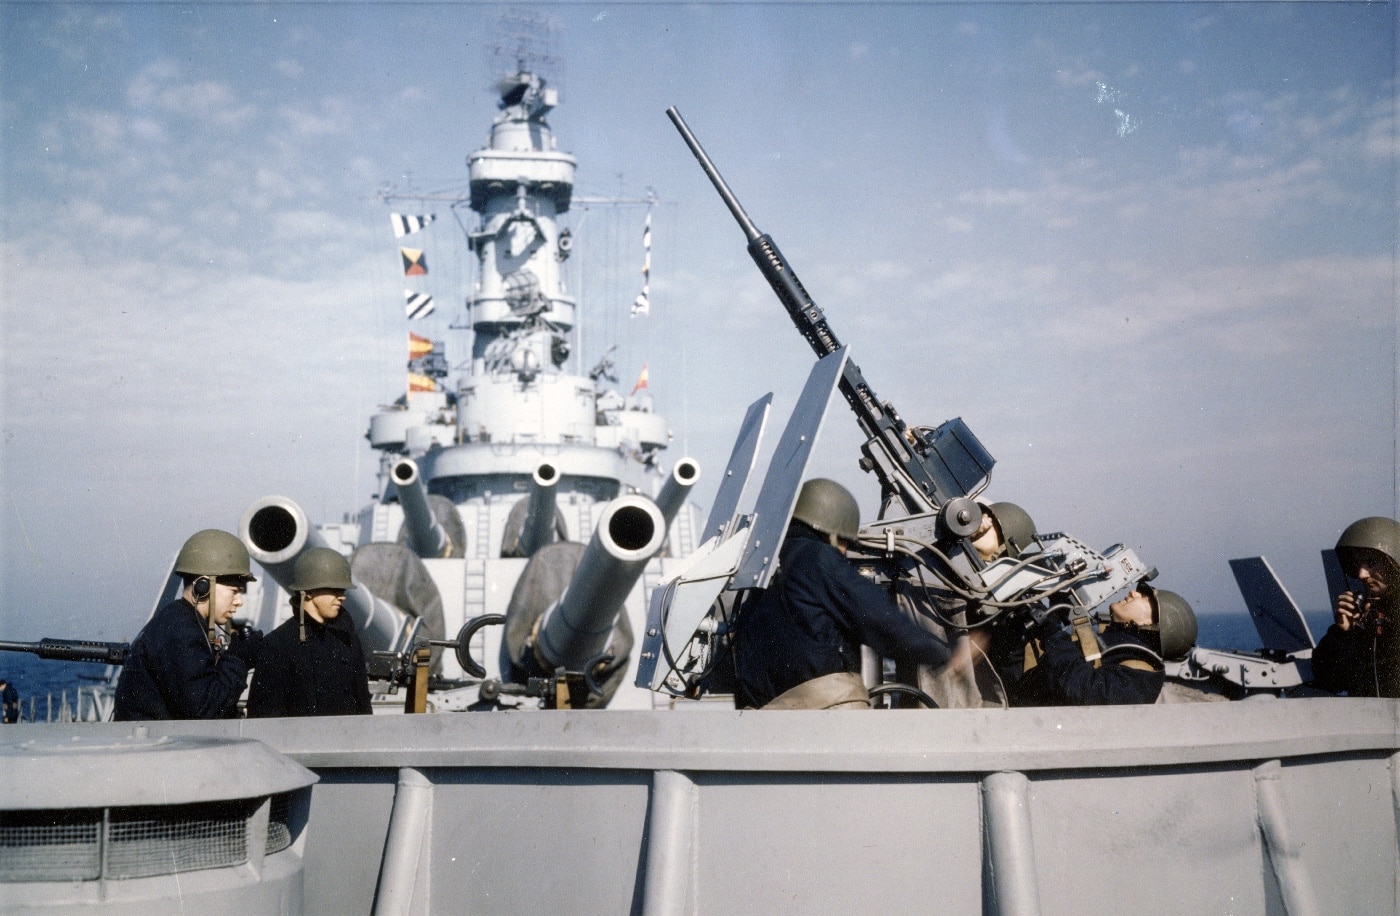 20mm gun crew on USS Iowa 1943